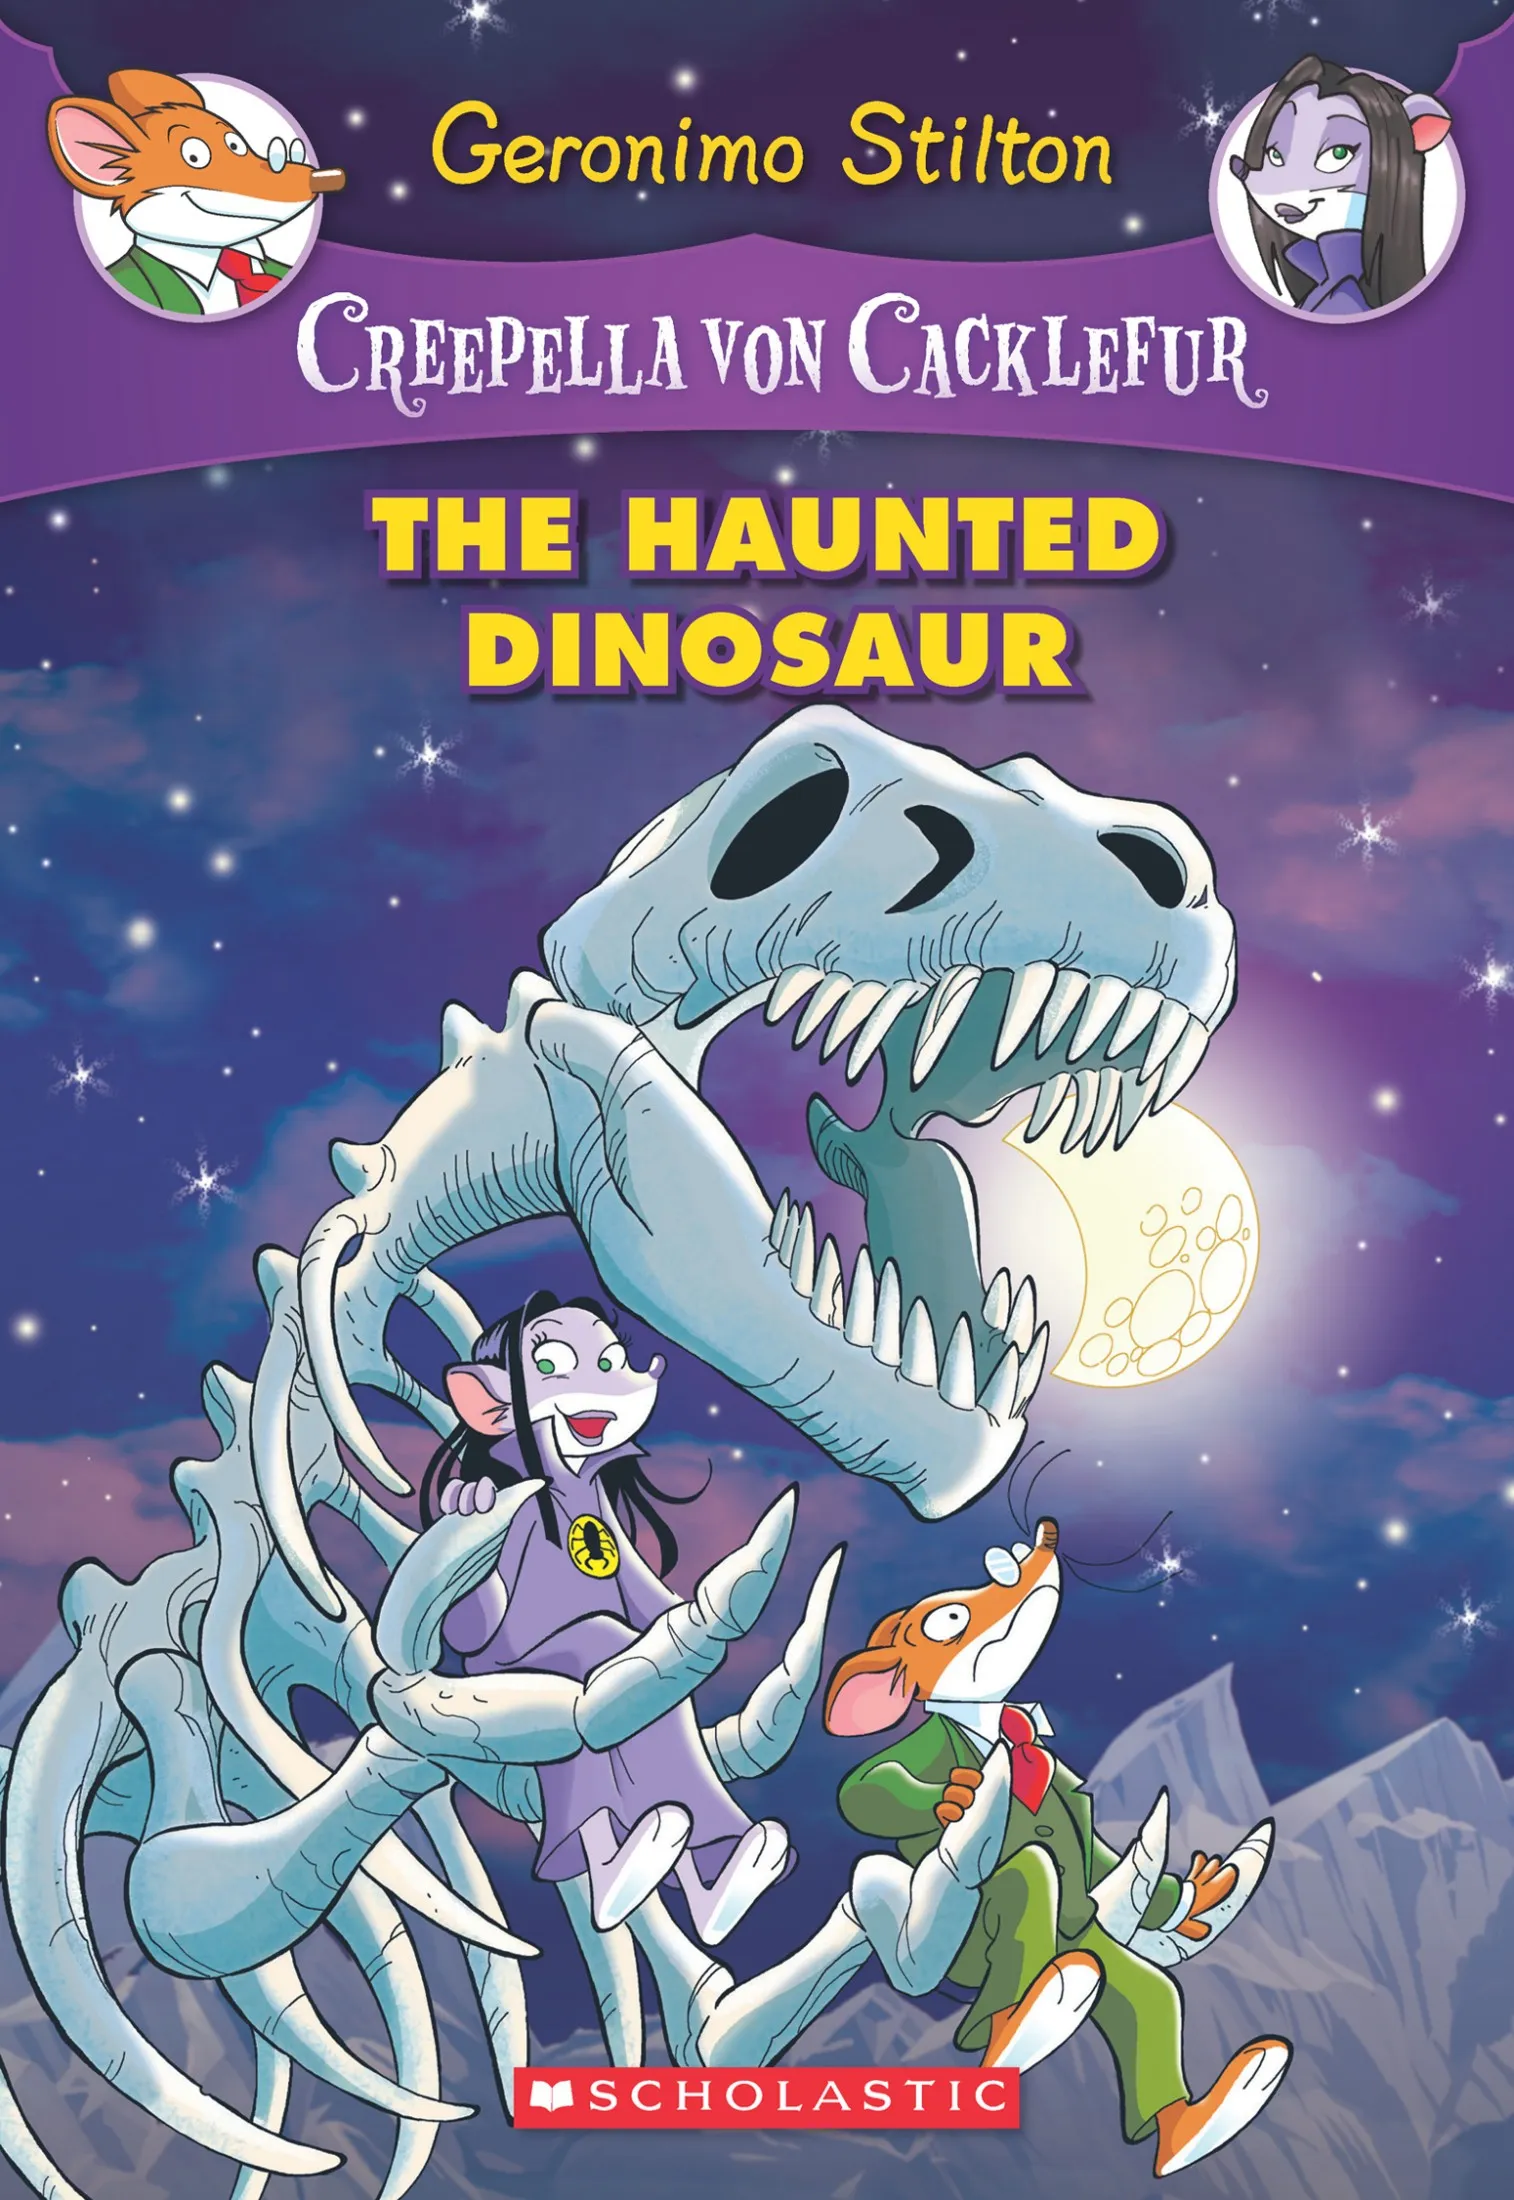 The Haunted Dinosaur (Creepella von Cacklefur #9)